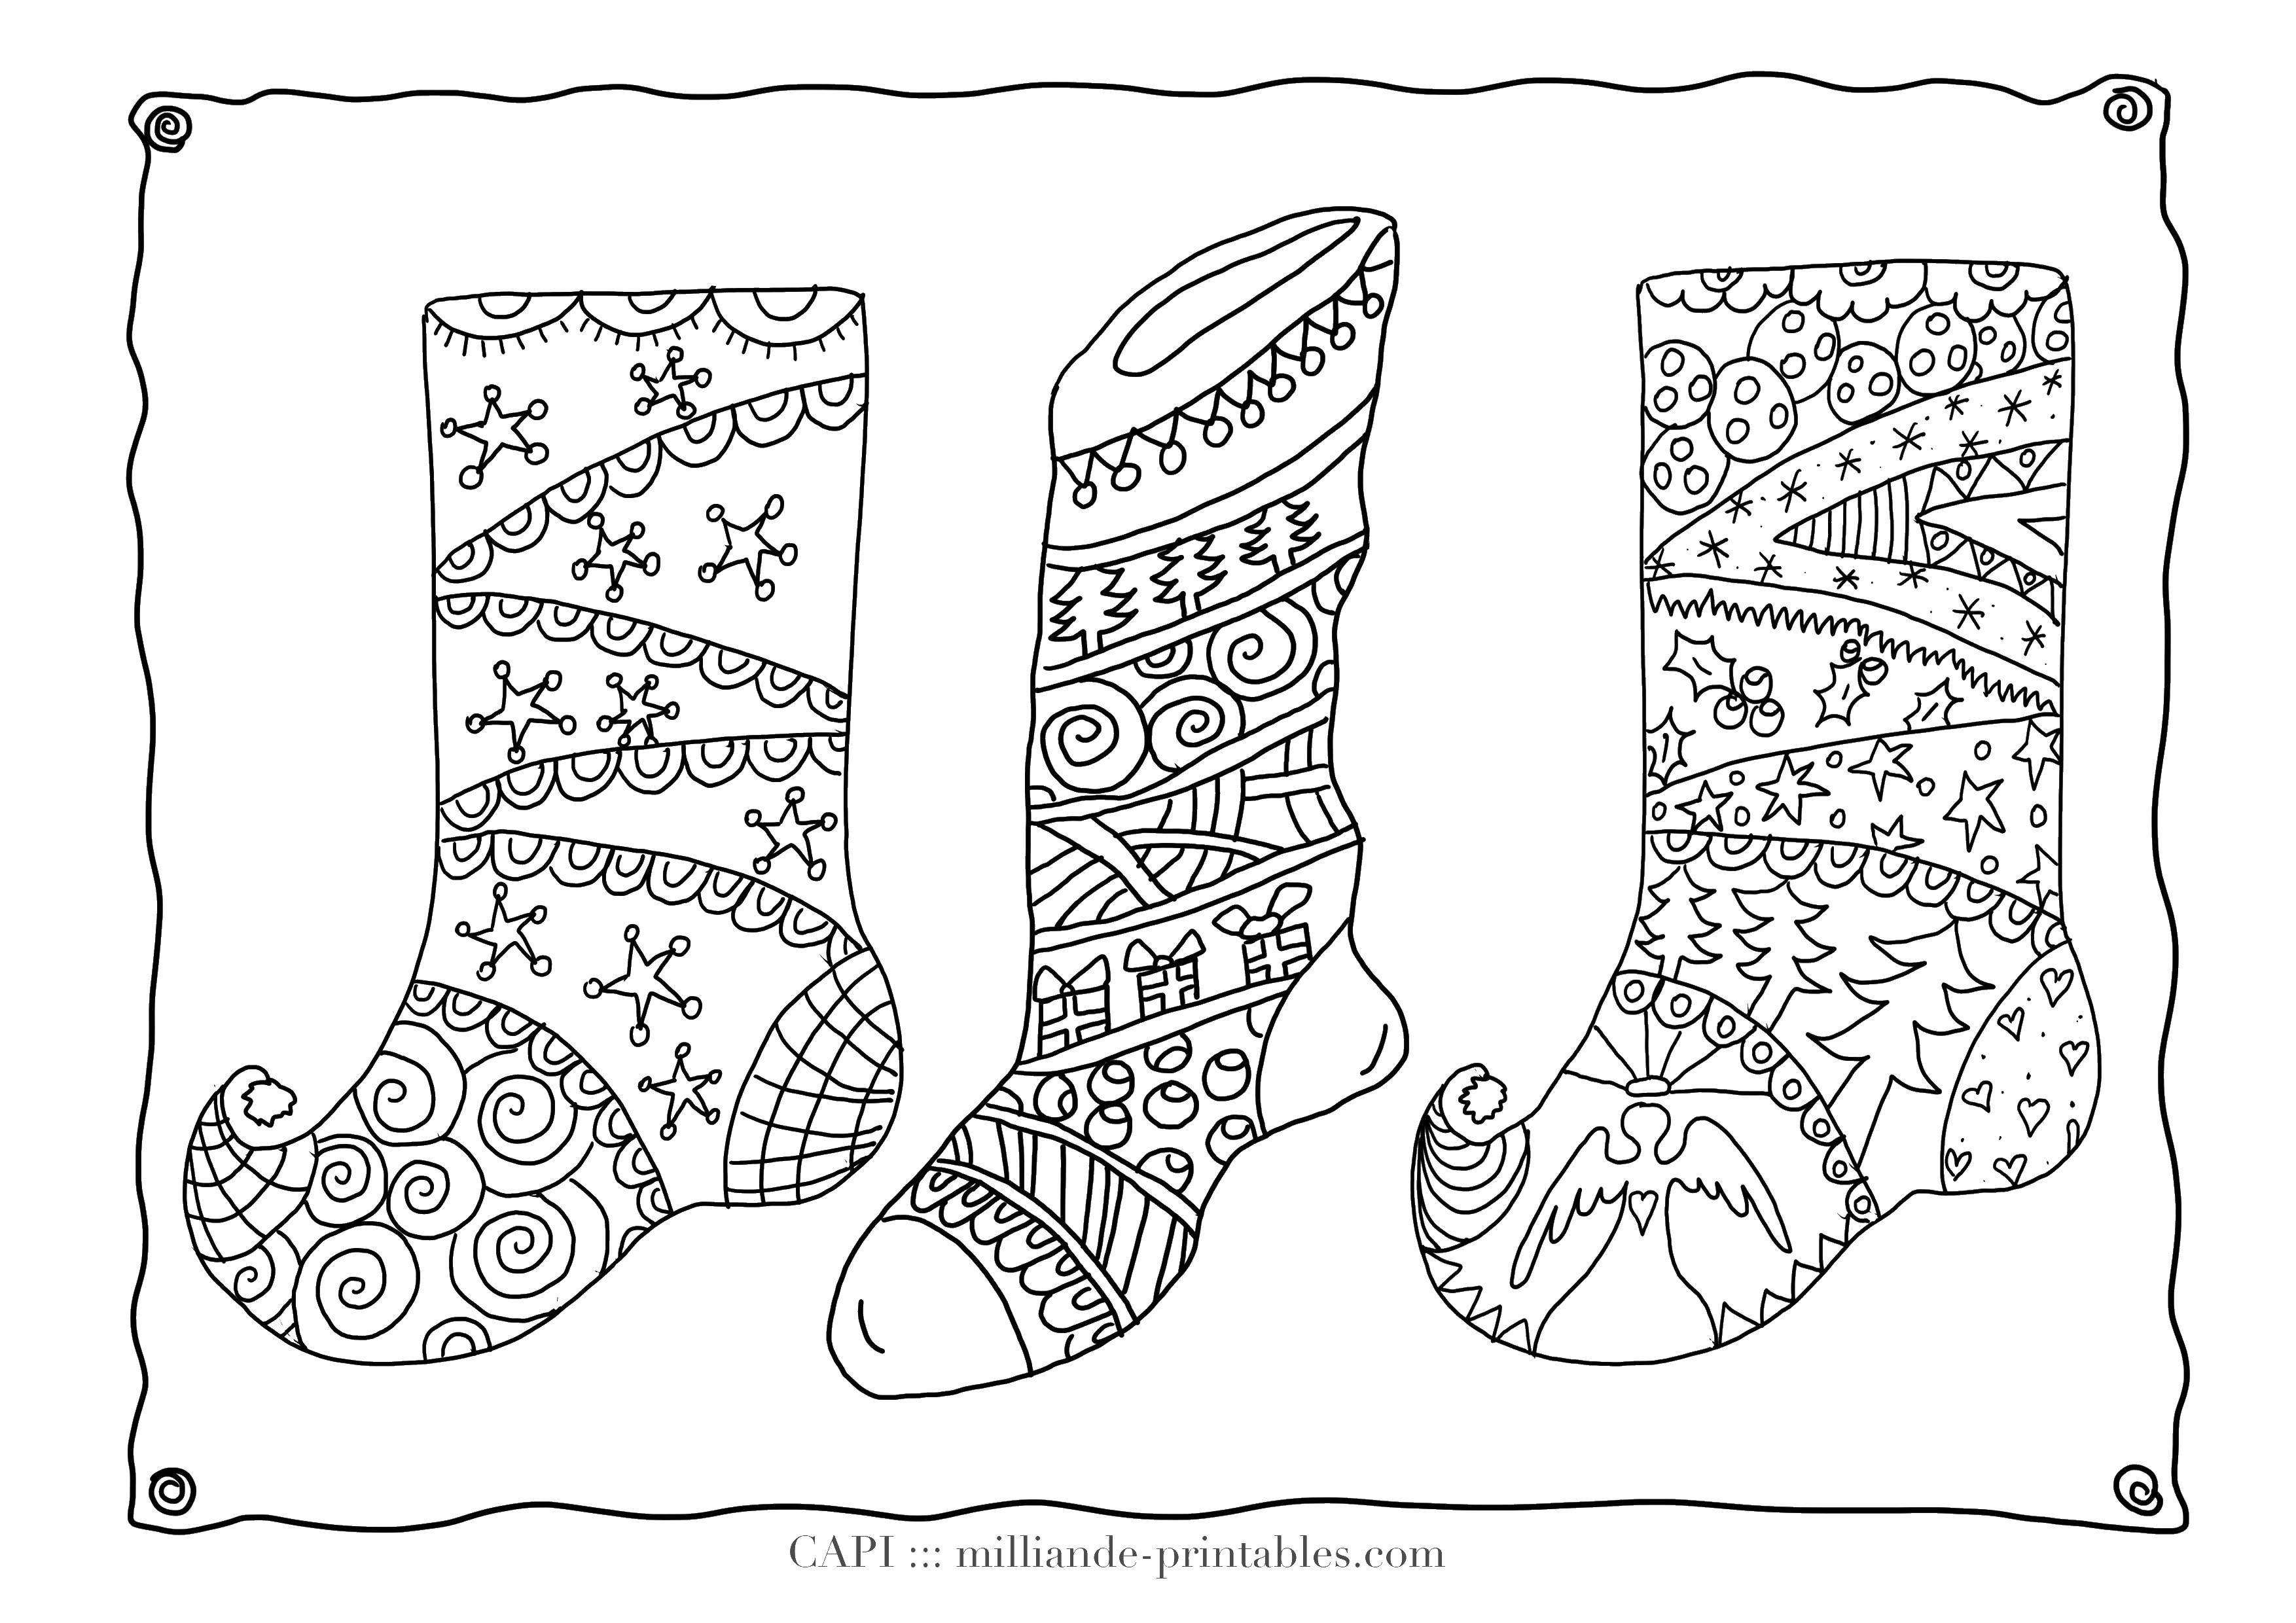 Coloring Socks. Category Clothing. Tags:  clothing, socks.